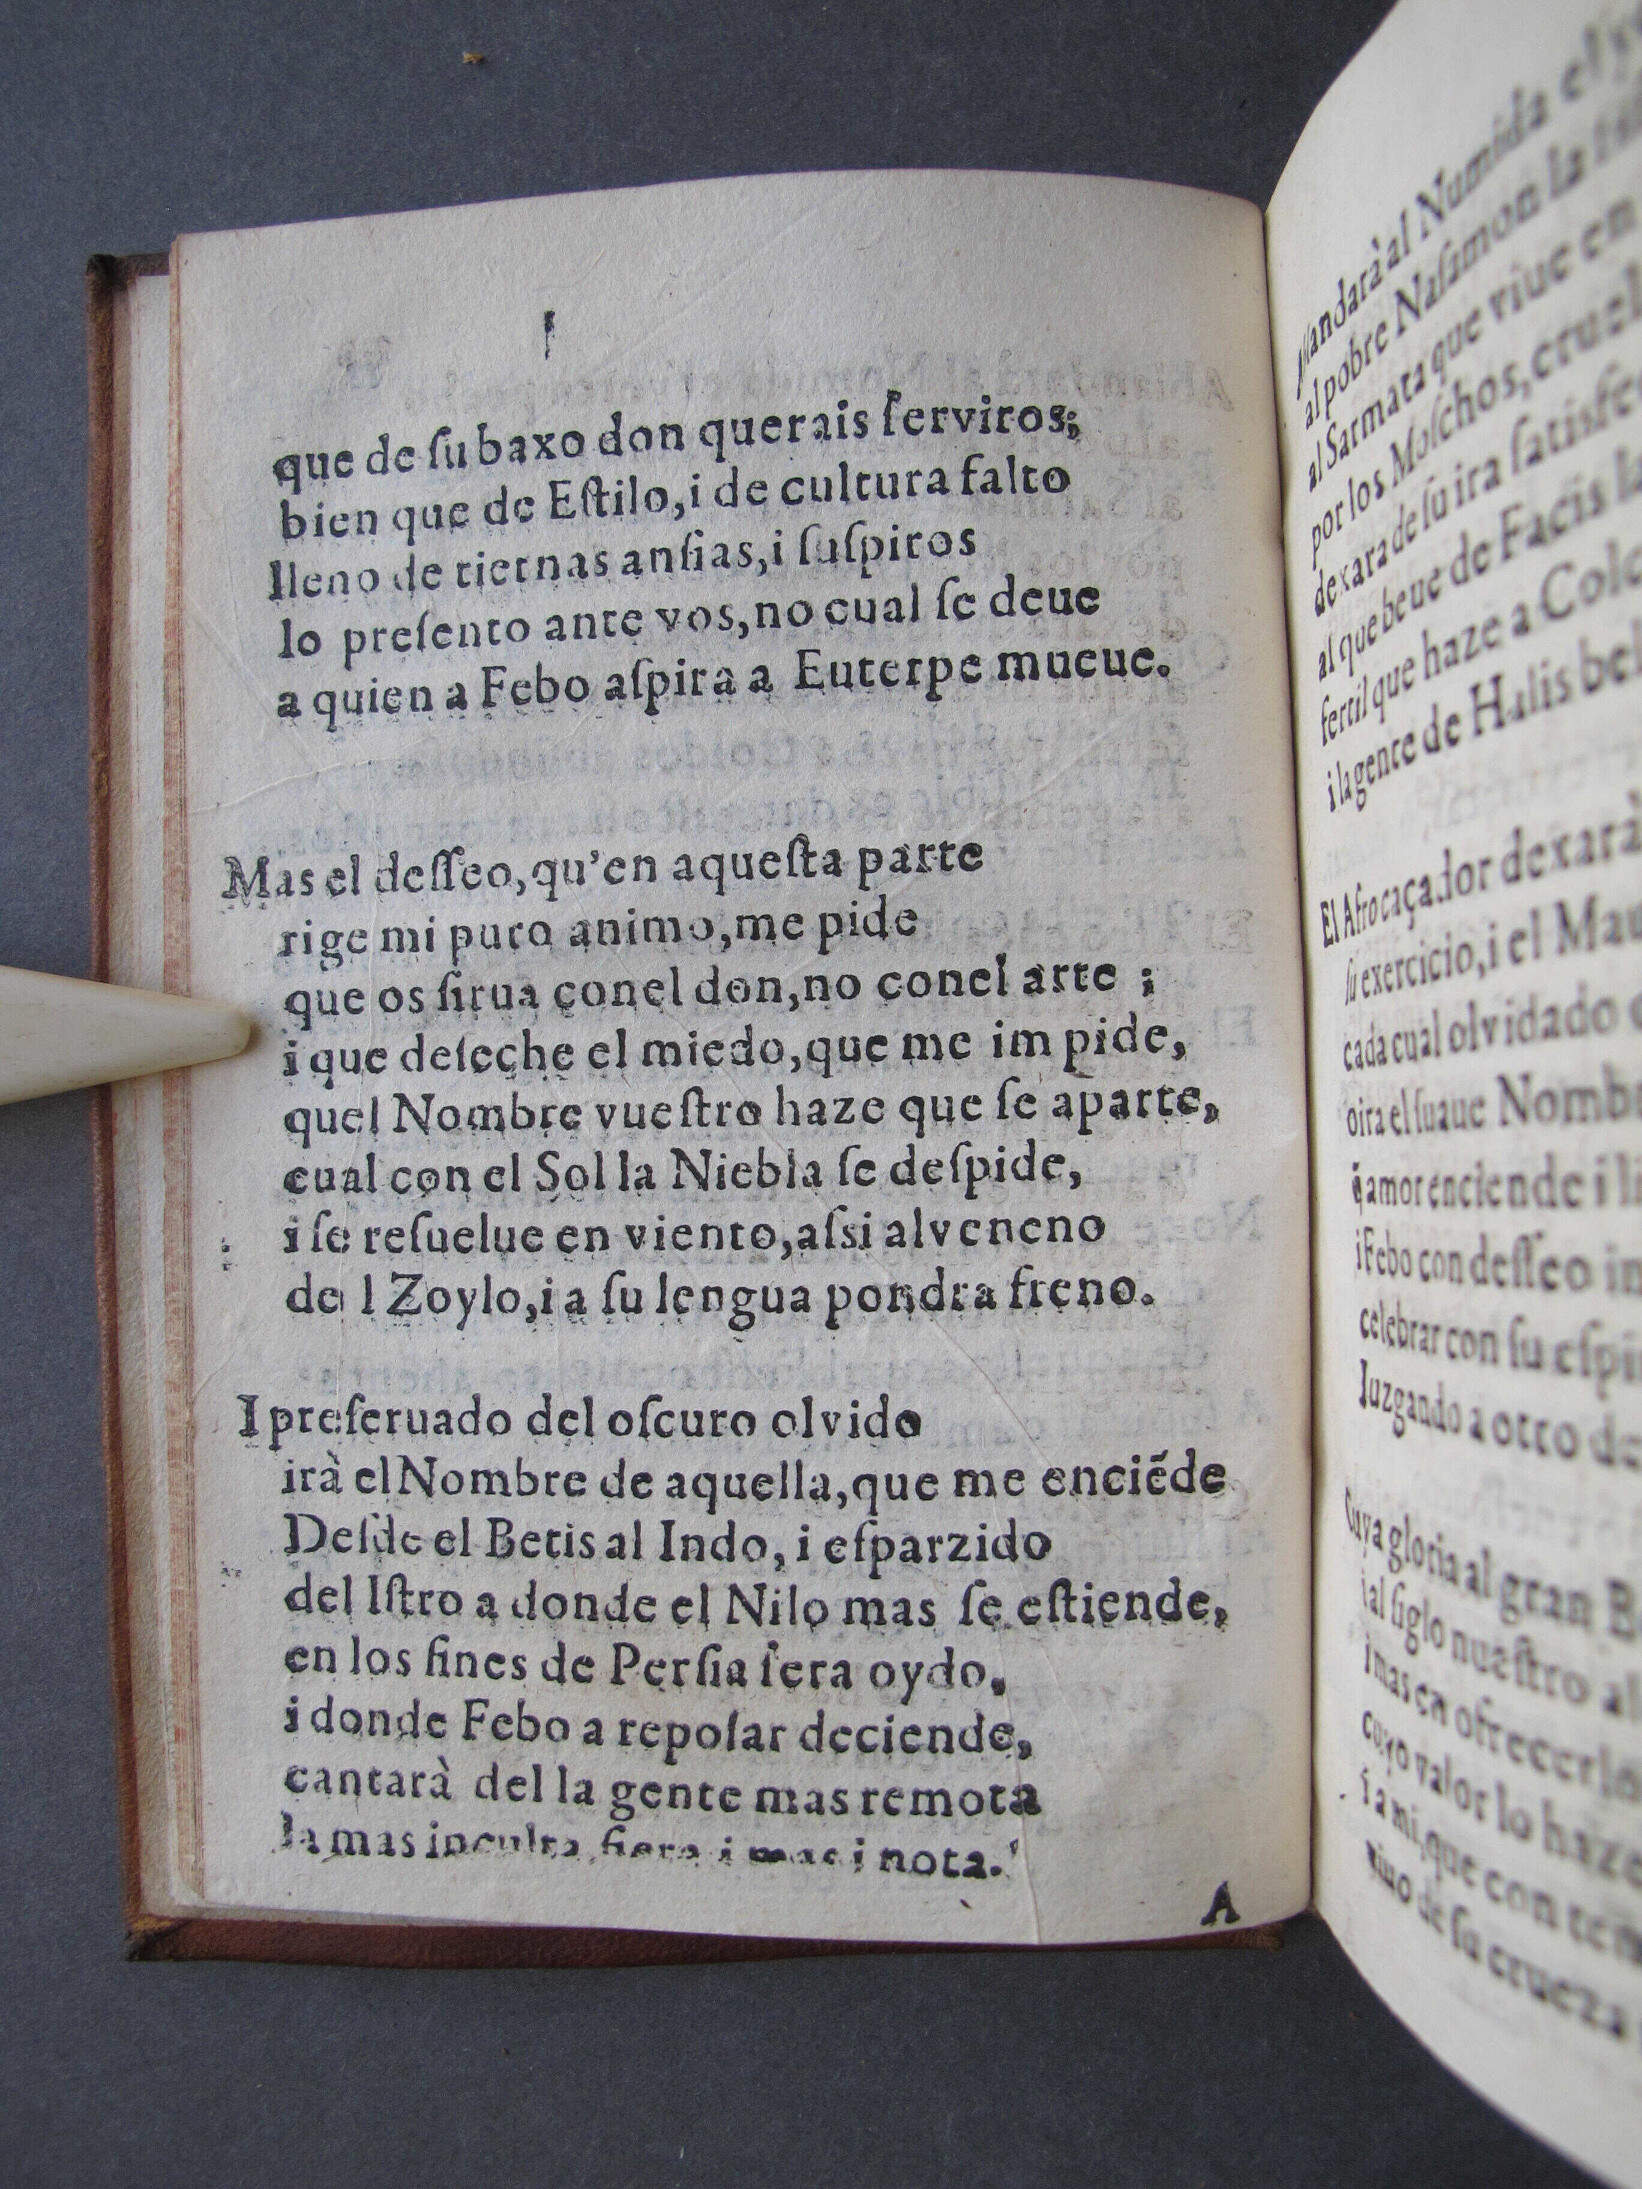 Folio B3 verso